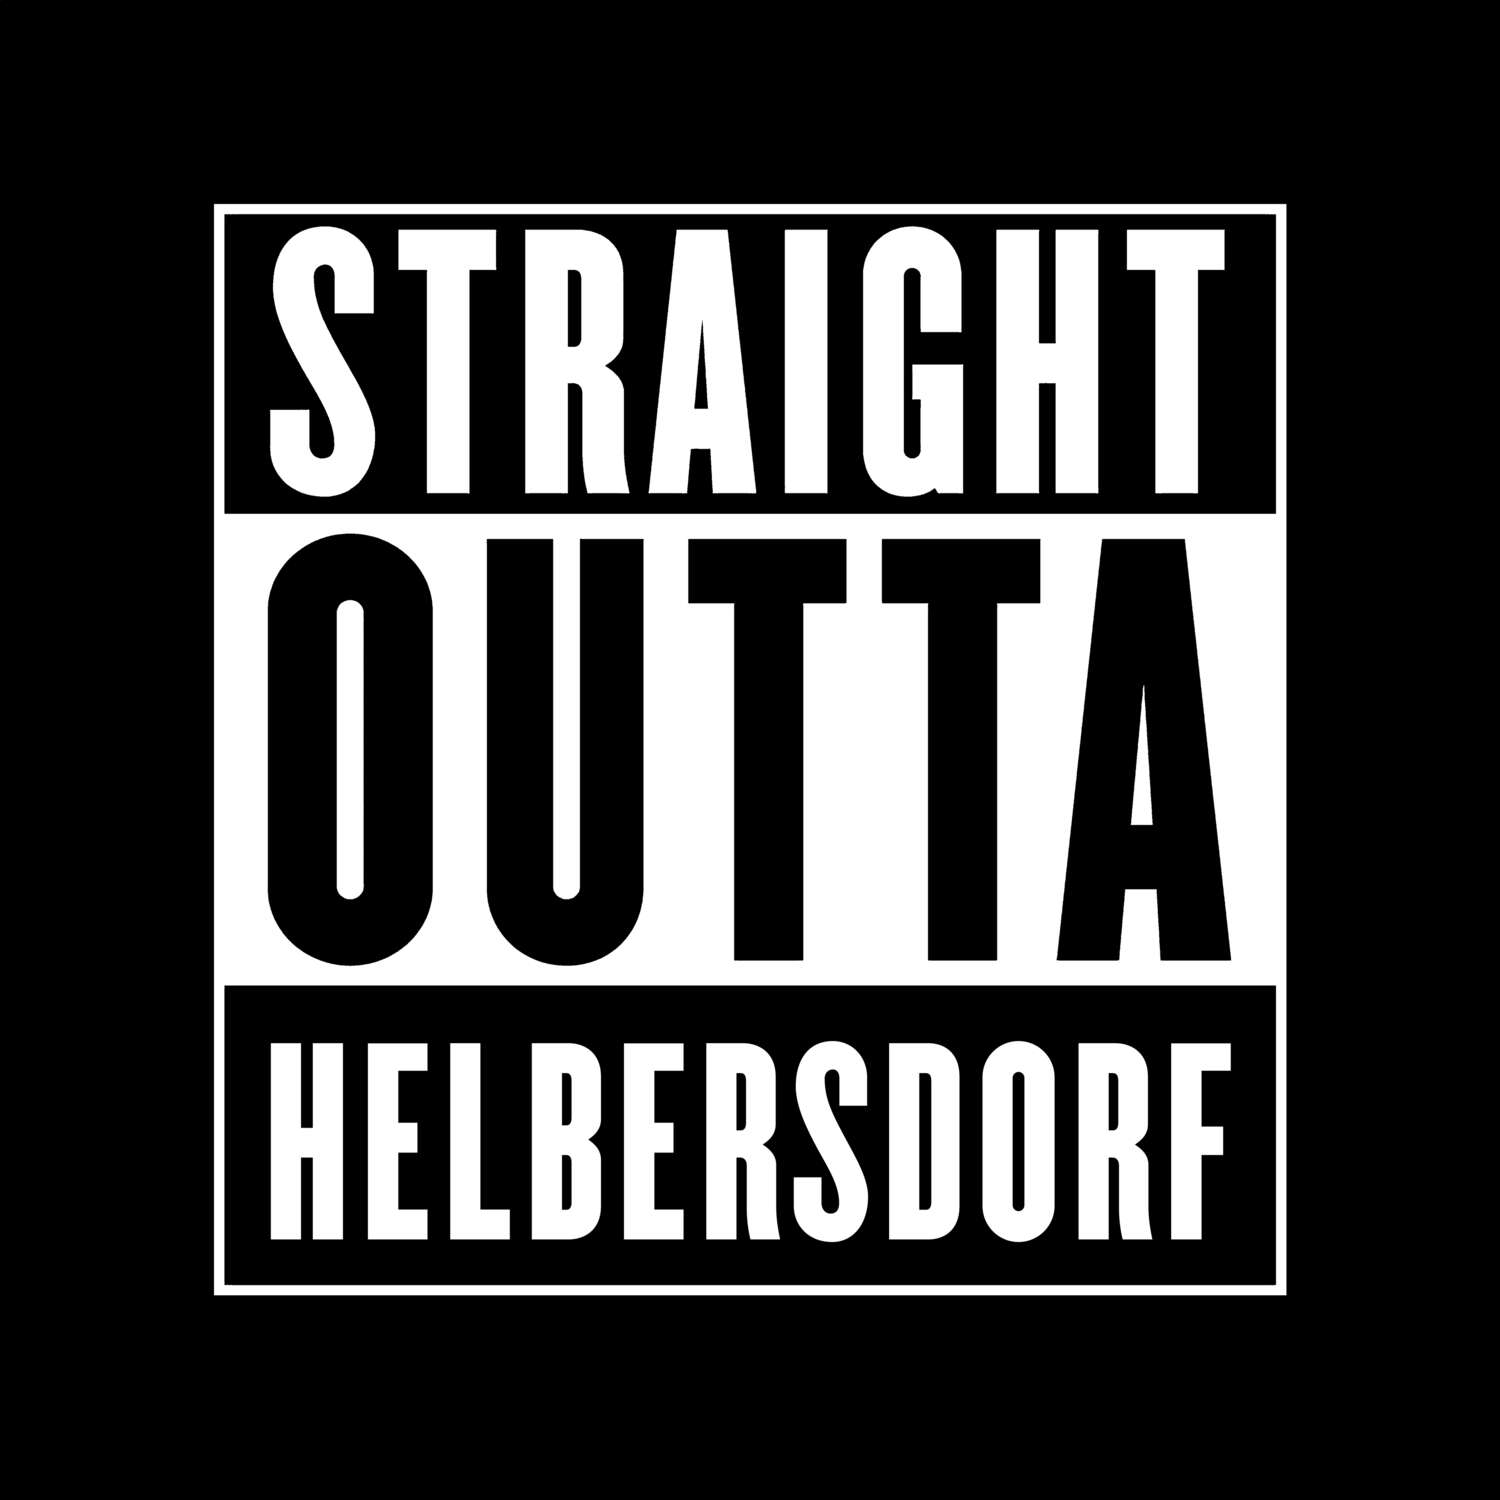 Helbersdorf T-Shirt »Straight Outta«